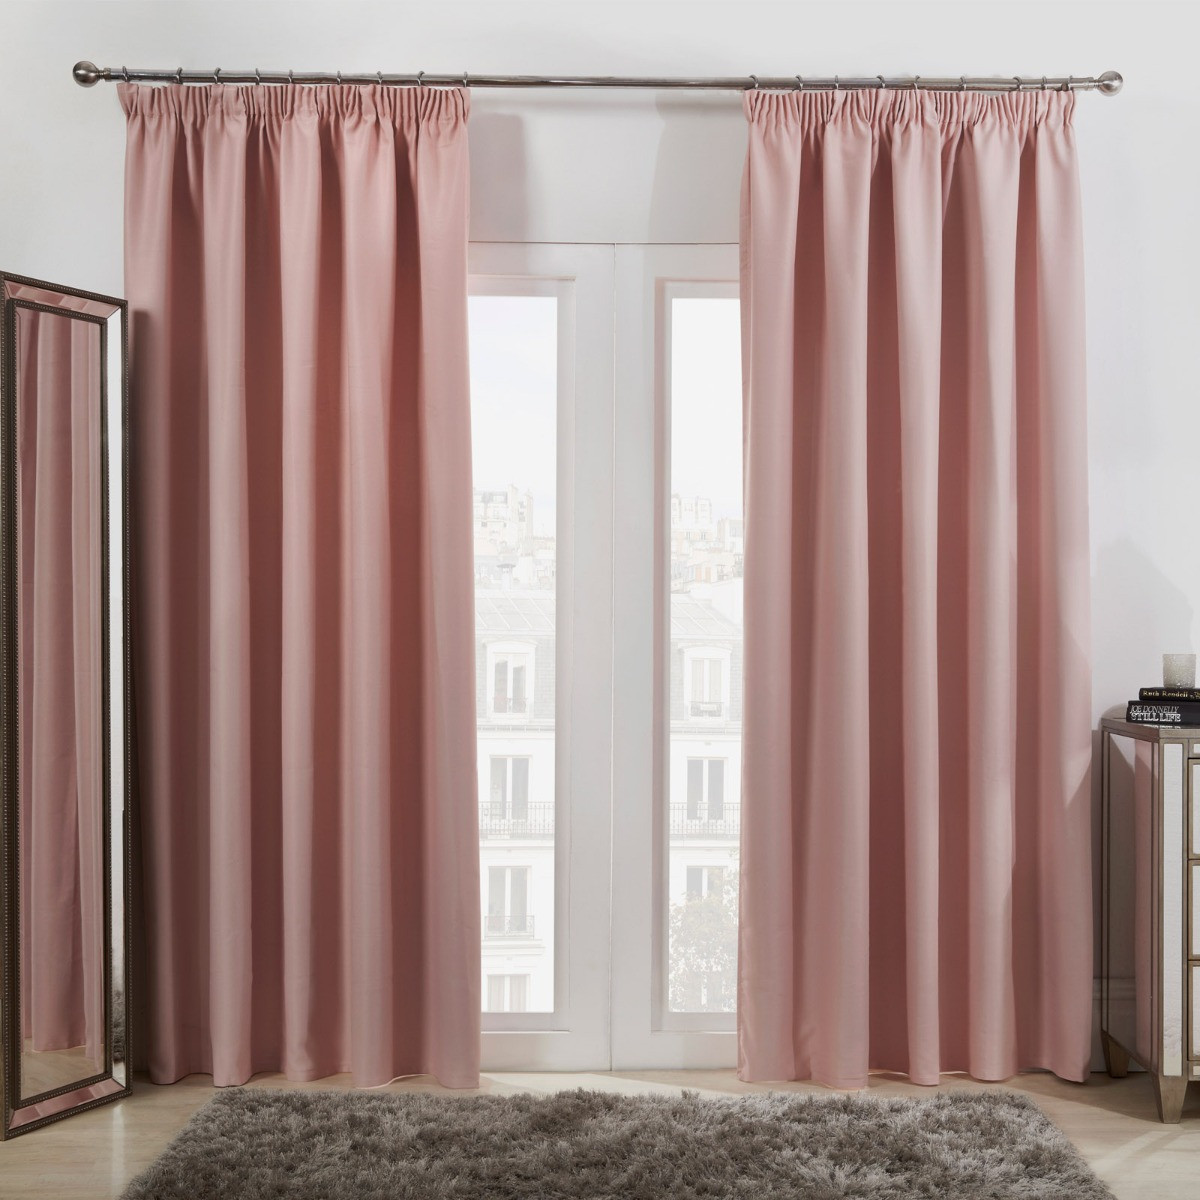 Dreamscene Pencil Pleat Thermal Blackout Curtains - Blush Pink>